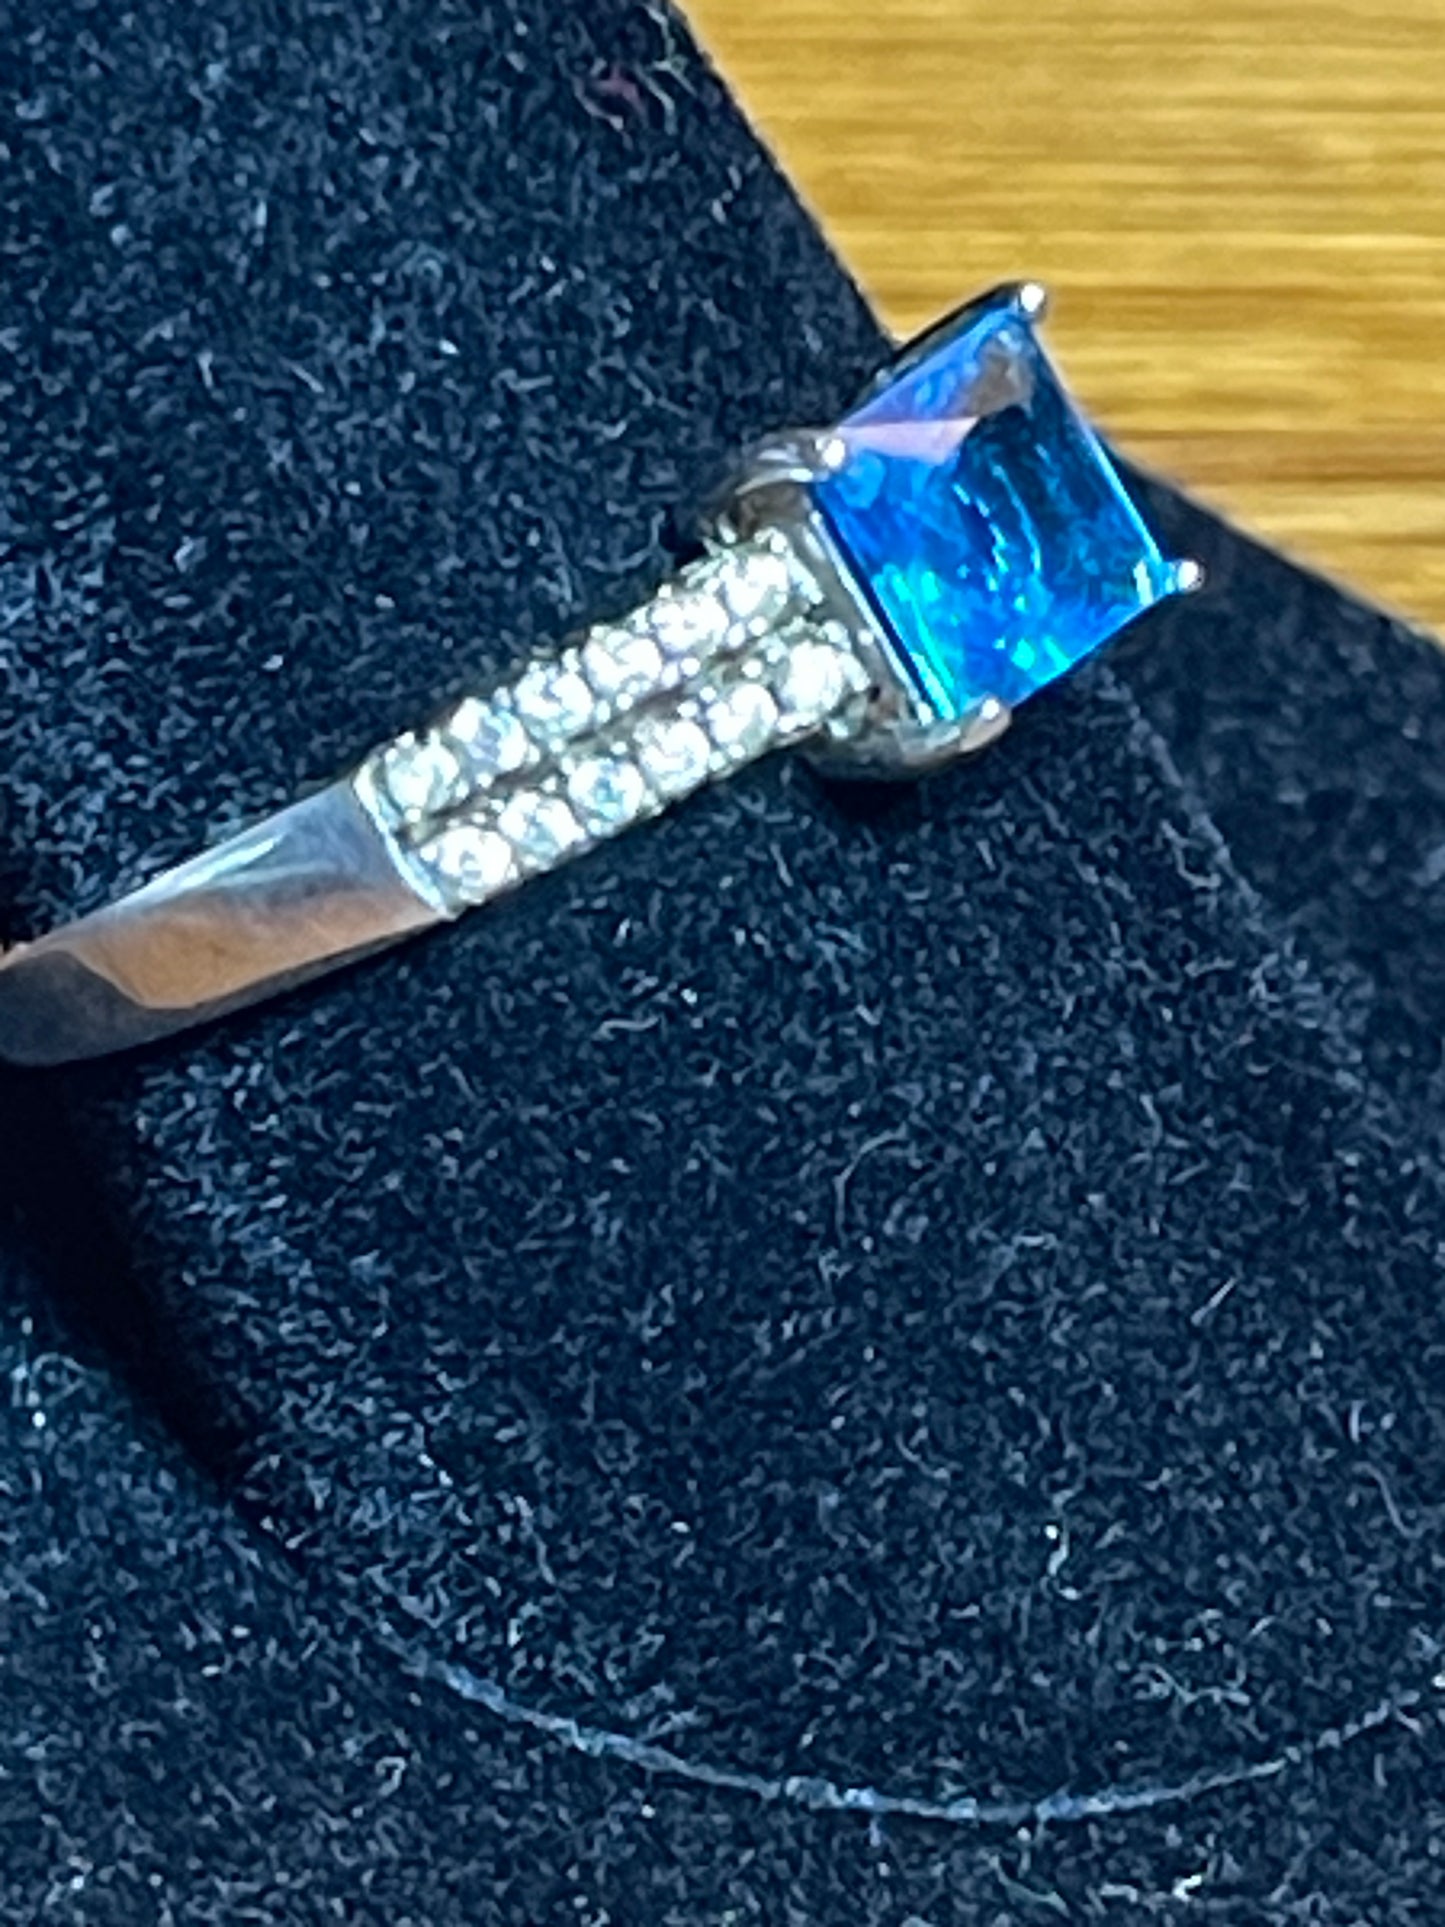 Genuine London Blue Topaz with Diamonds Size 10 on S925 Ring